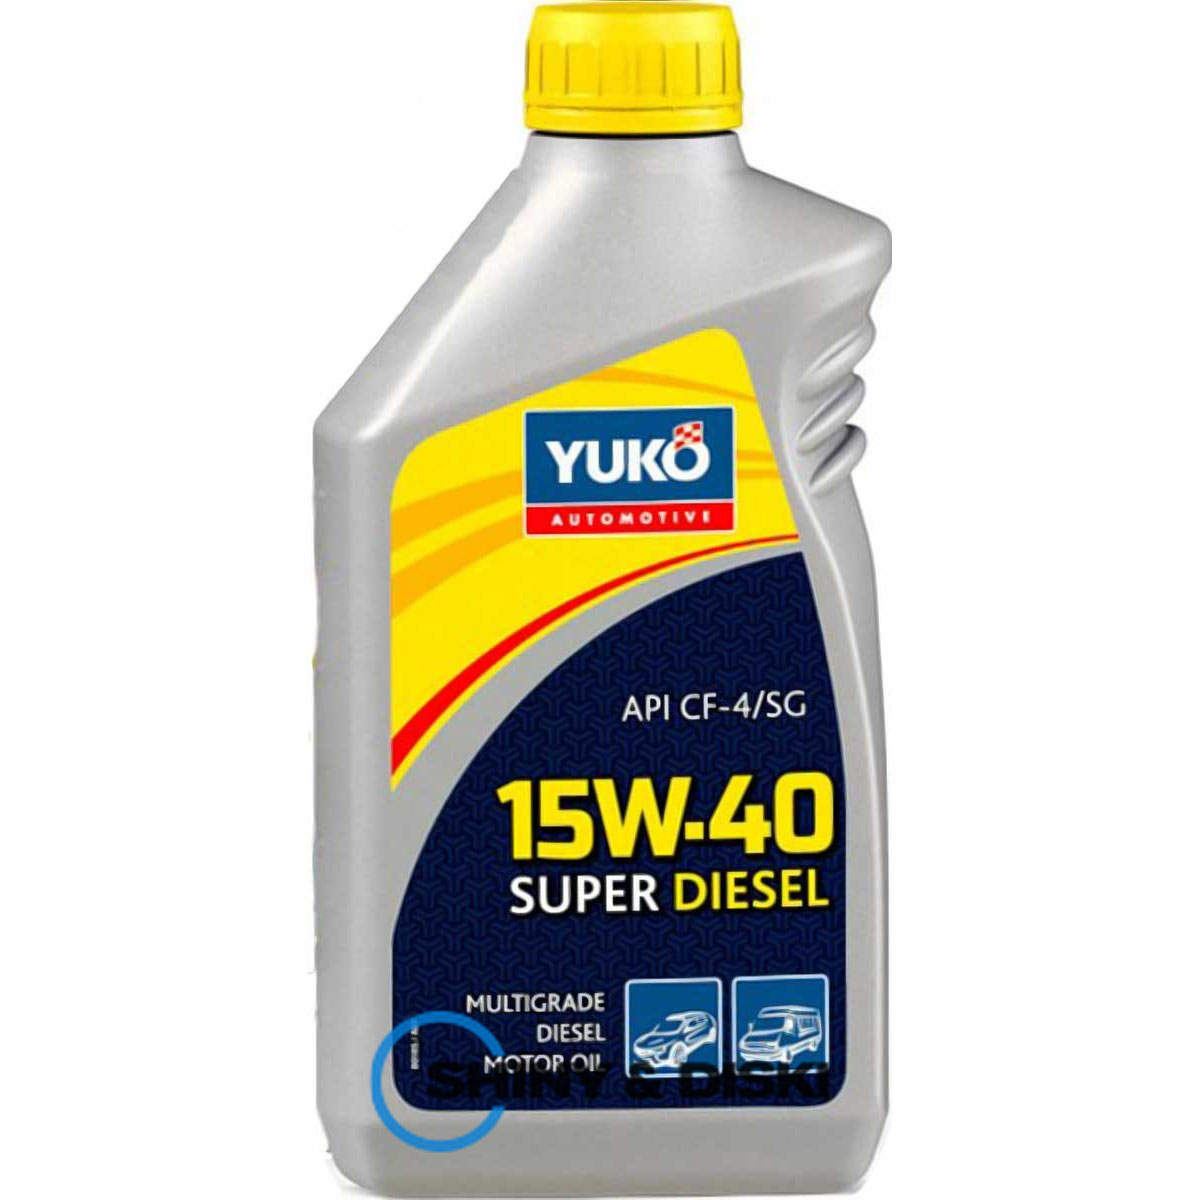 yuko super diesel